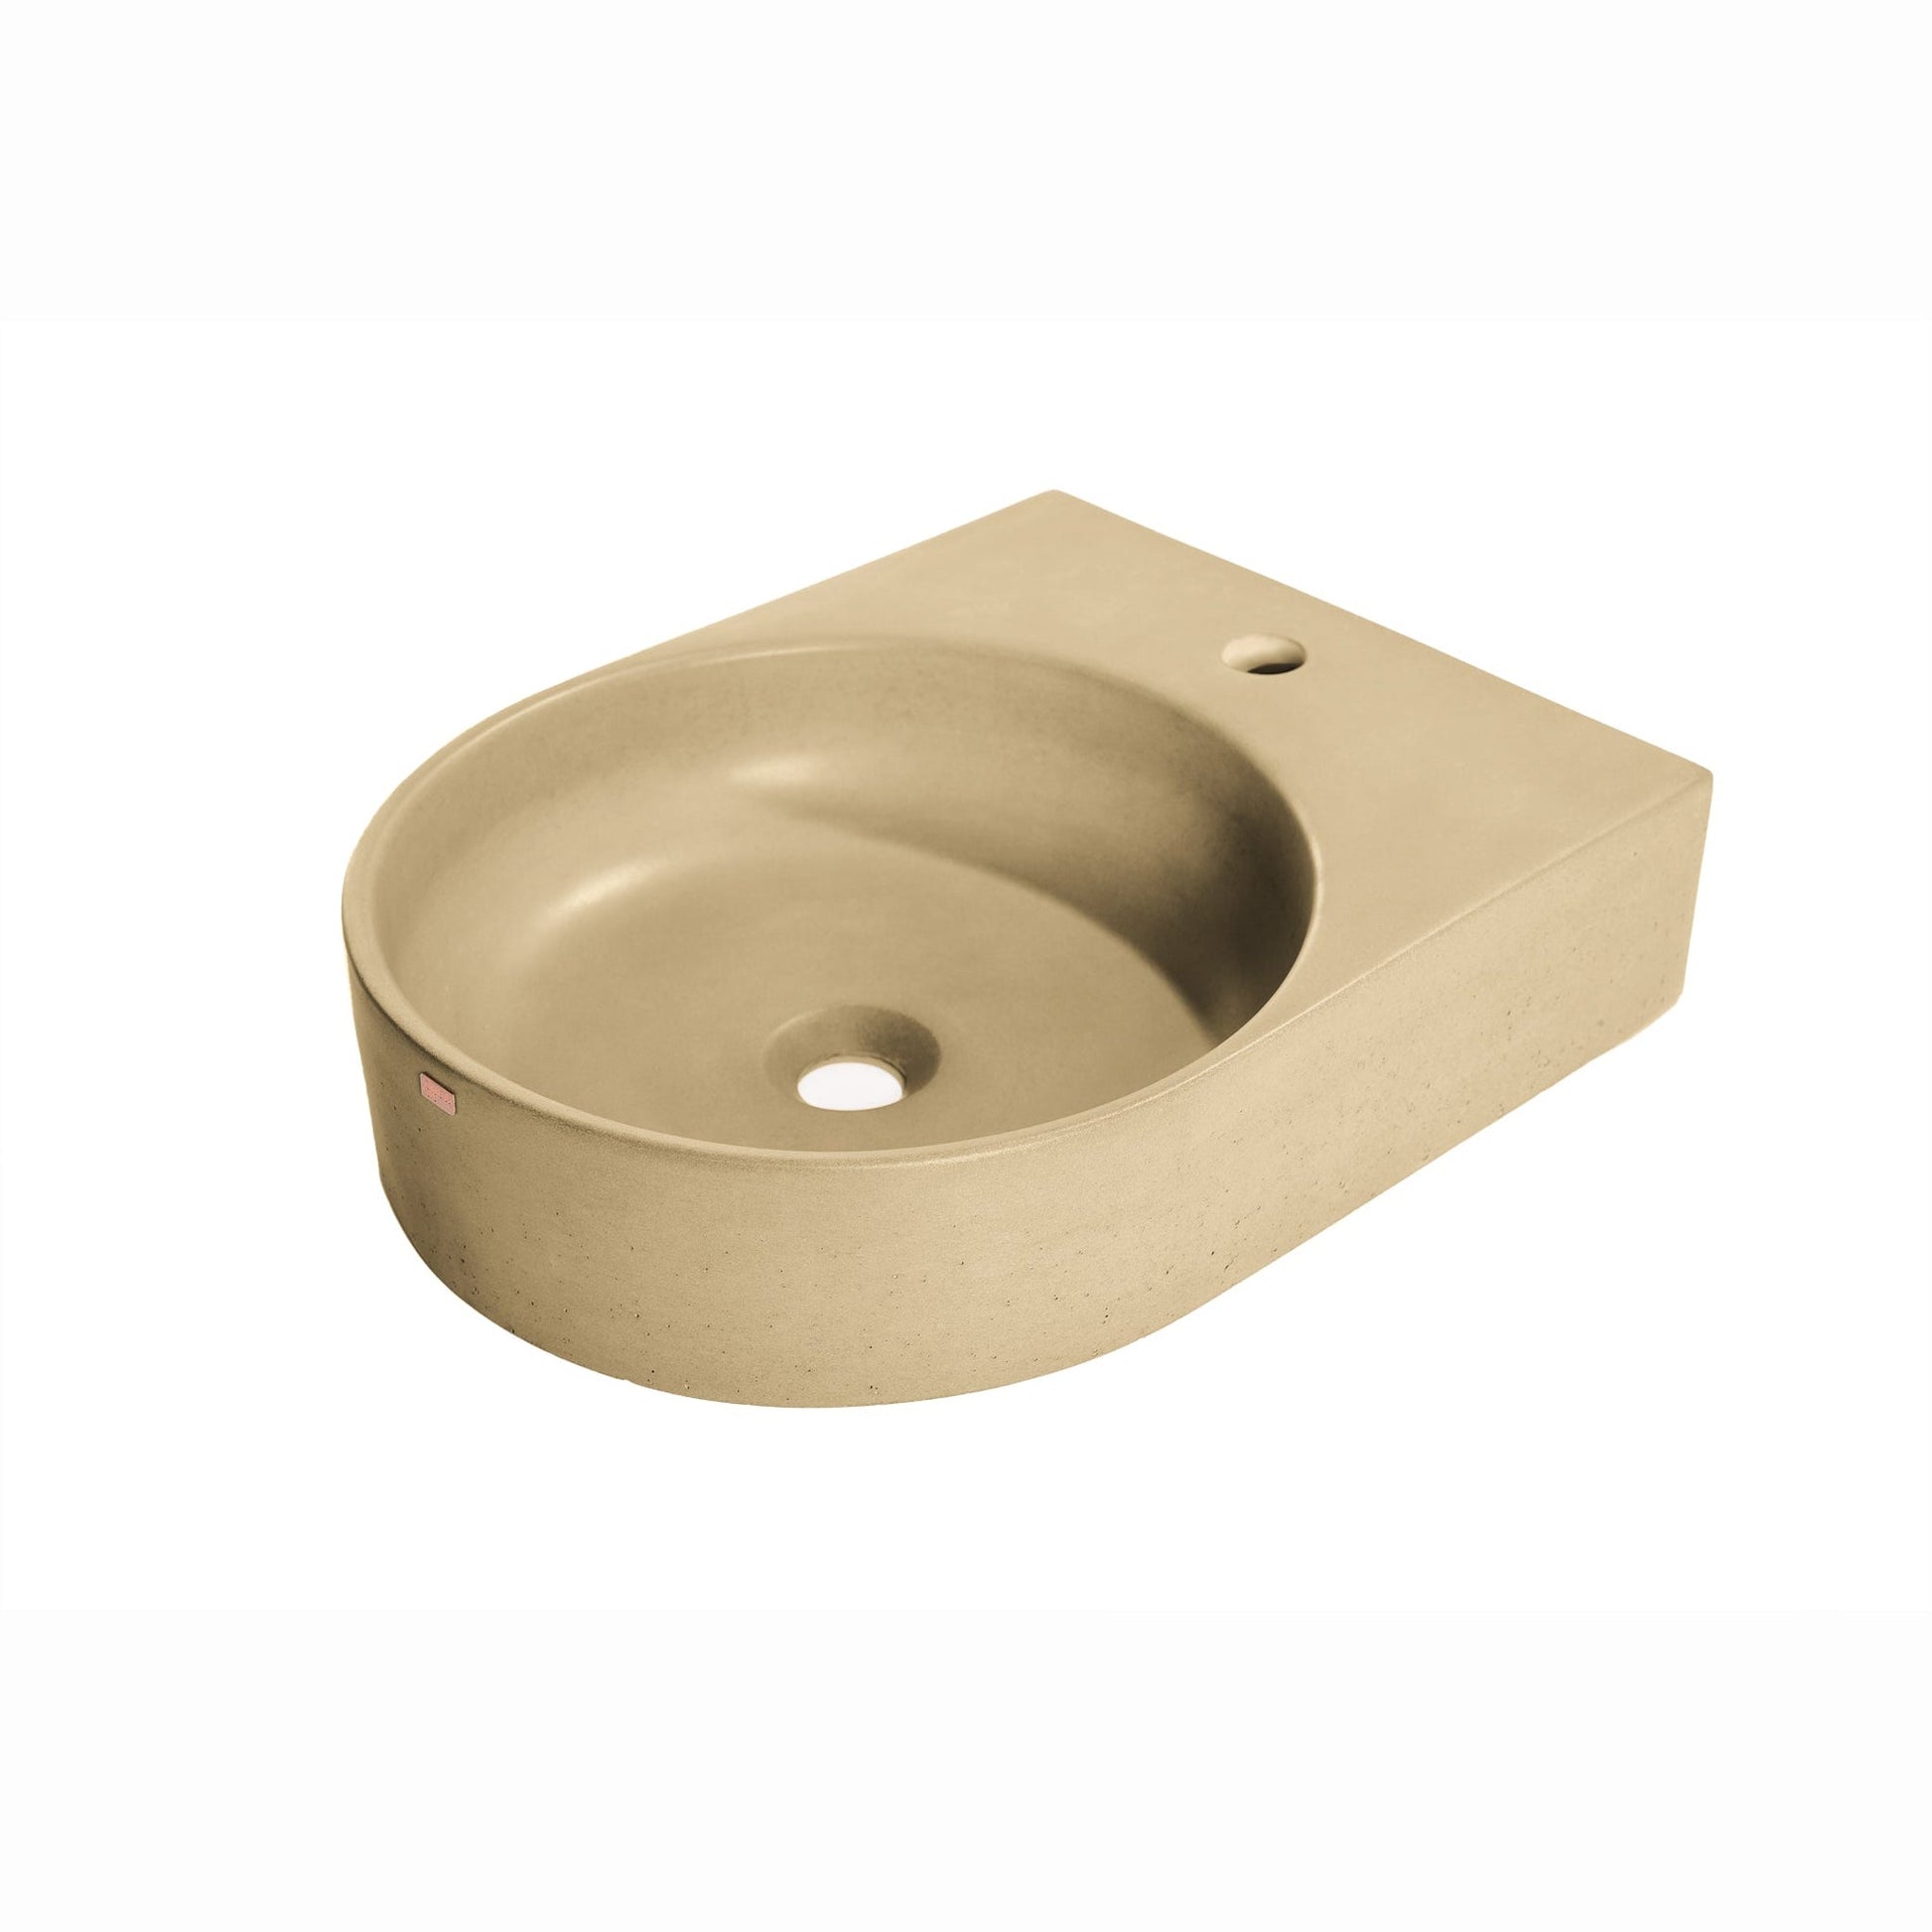 Konkretus Bahia01 15" Desert Brown Wall-Mounted Round Vessel Concrete Bathroom Sink